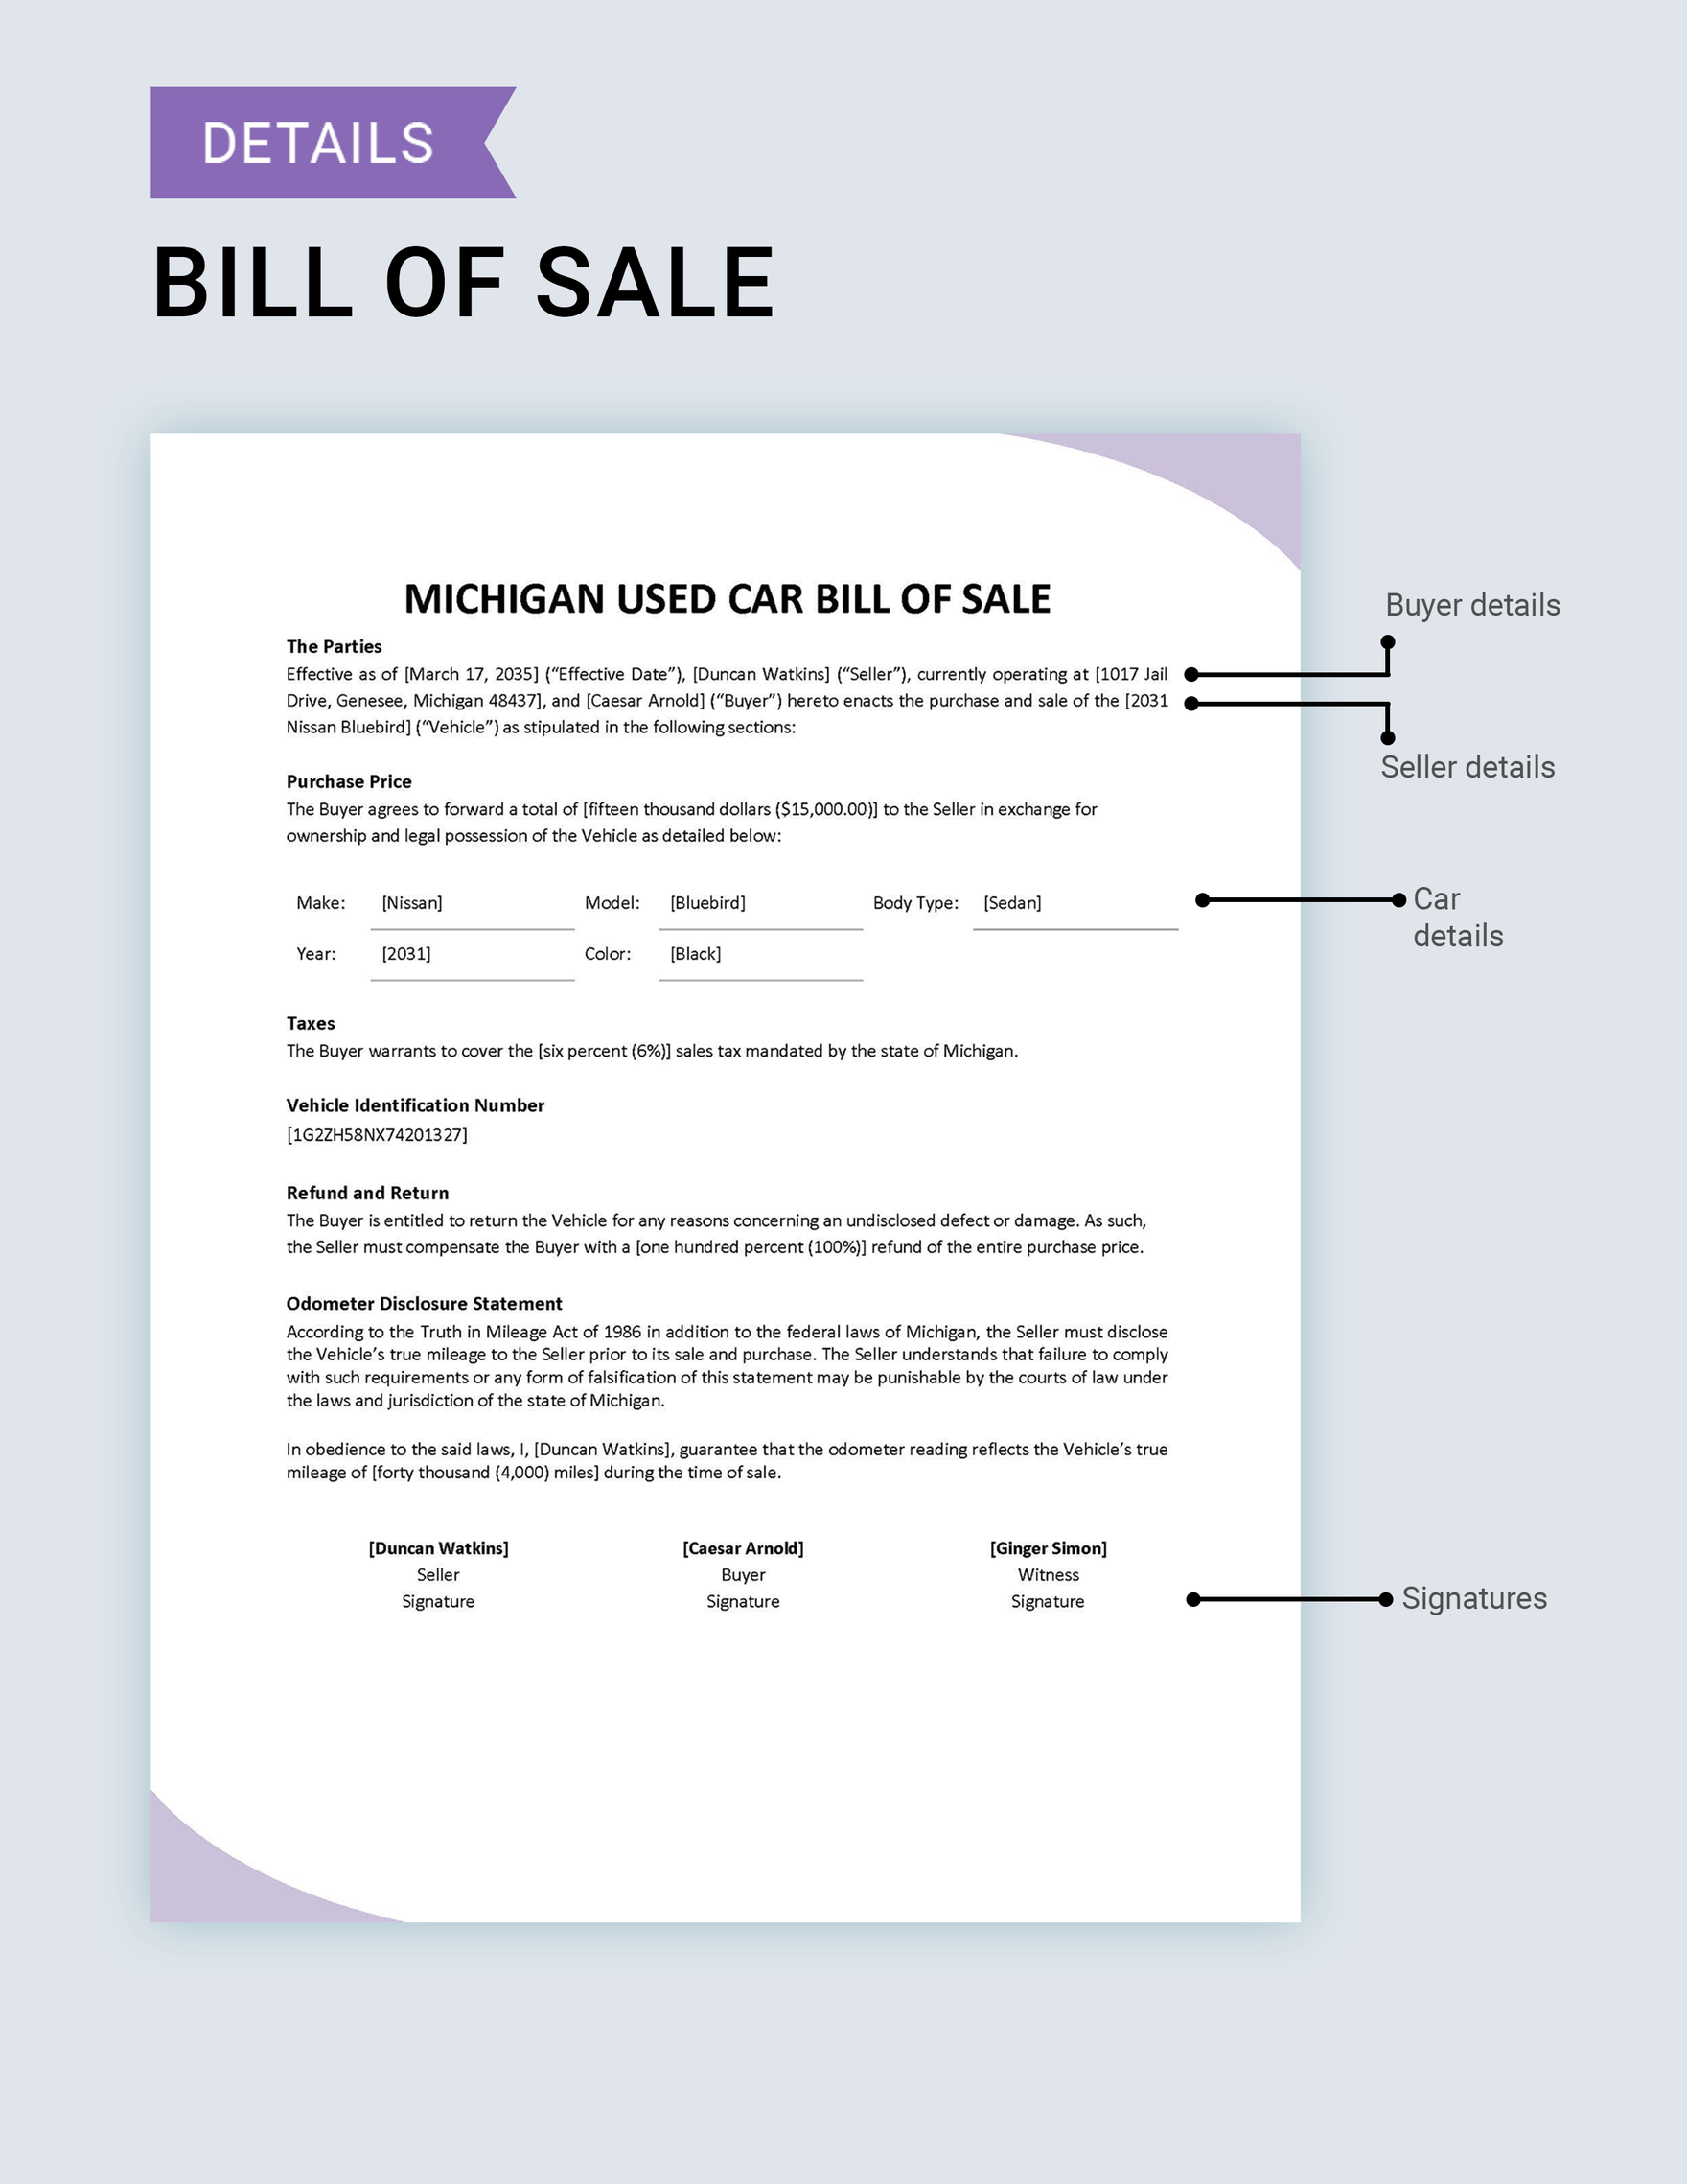 Michigan Used Car Bill of Sale Template